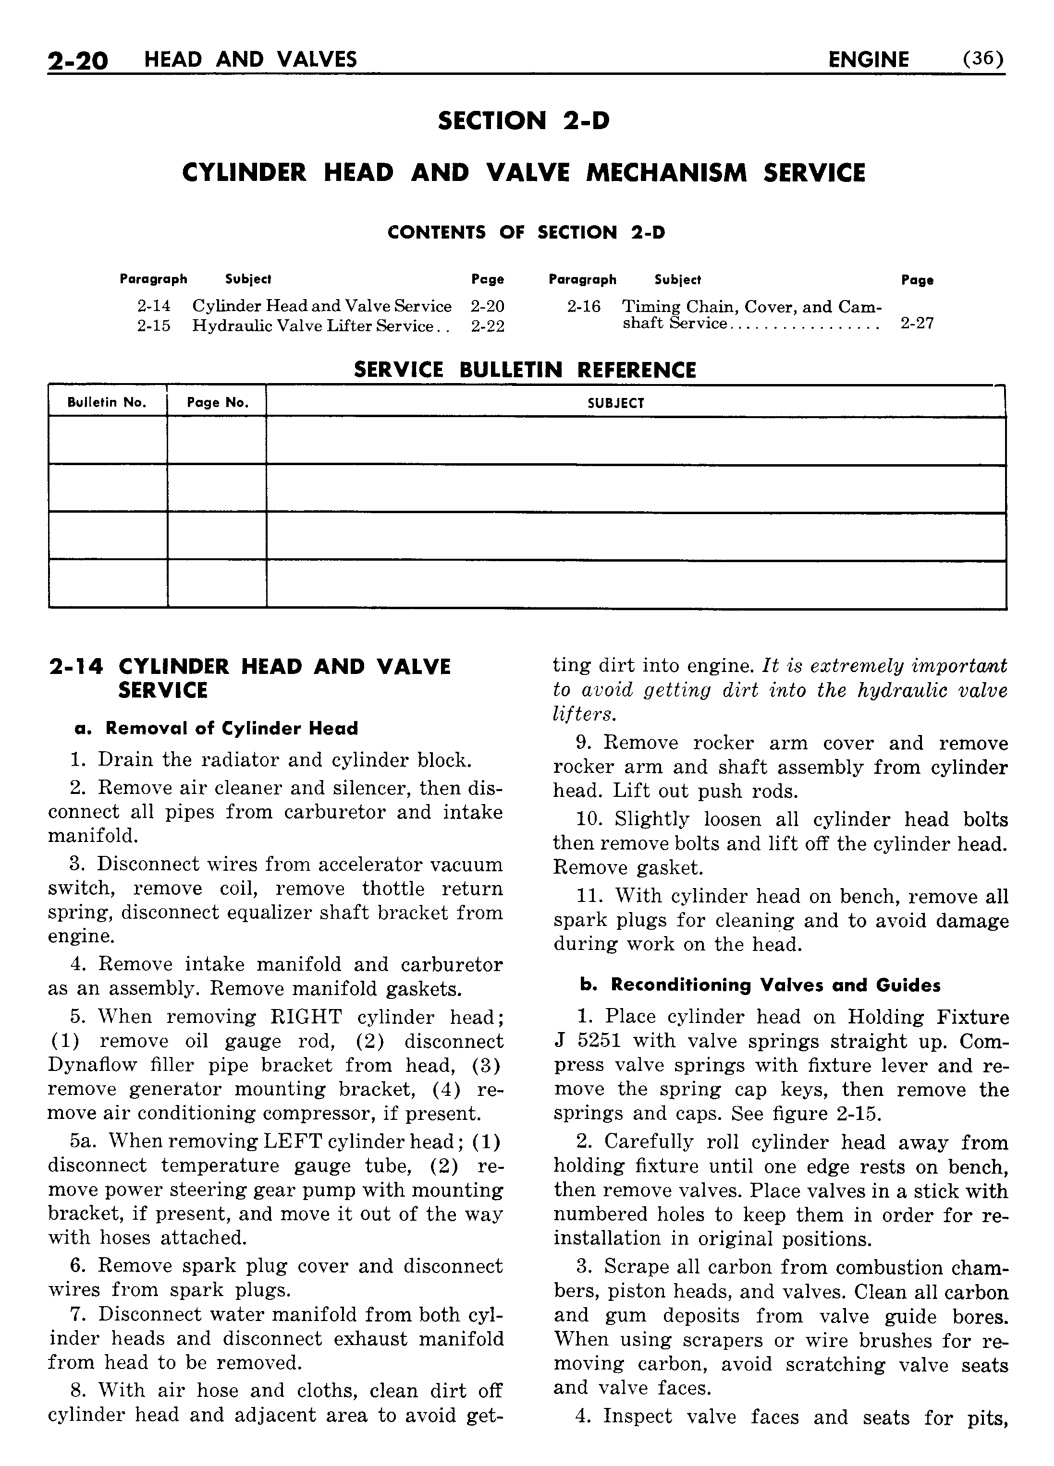 n_03 1955 Buick Shop Manual - Engine-020-020.jpg